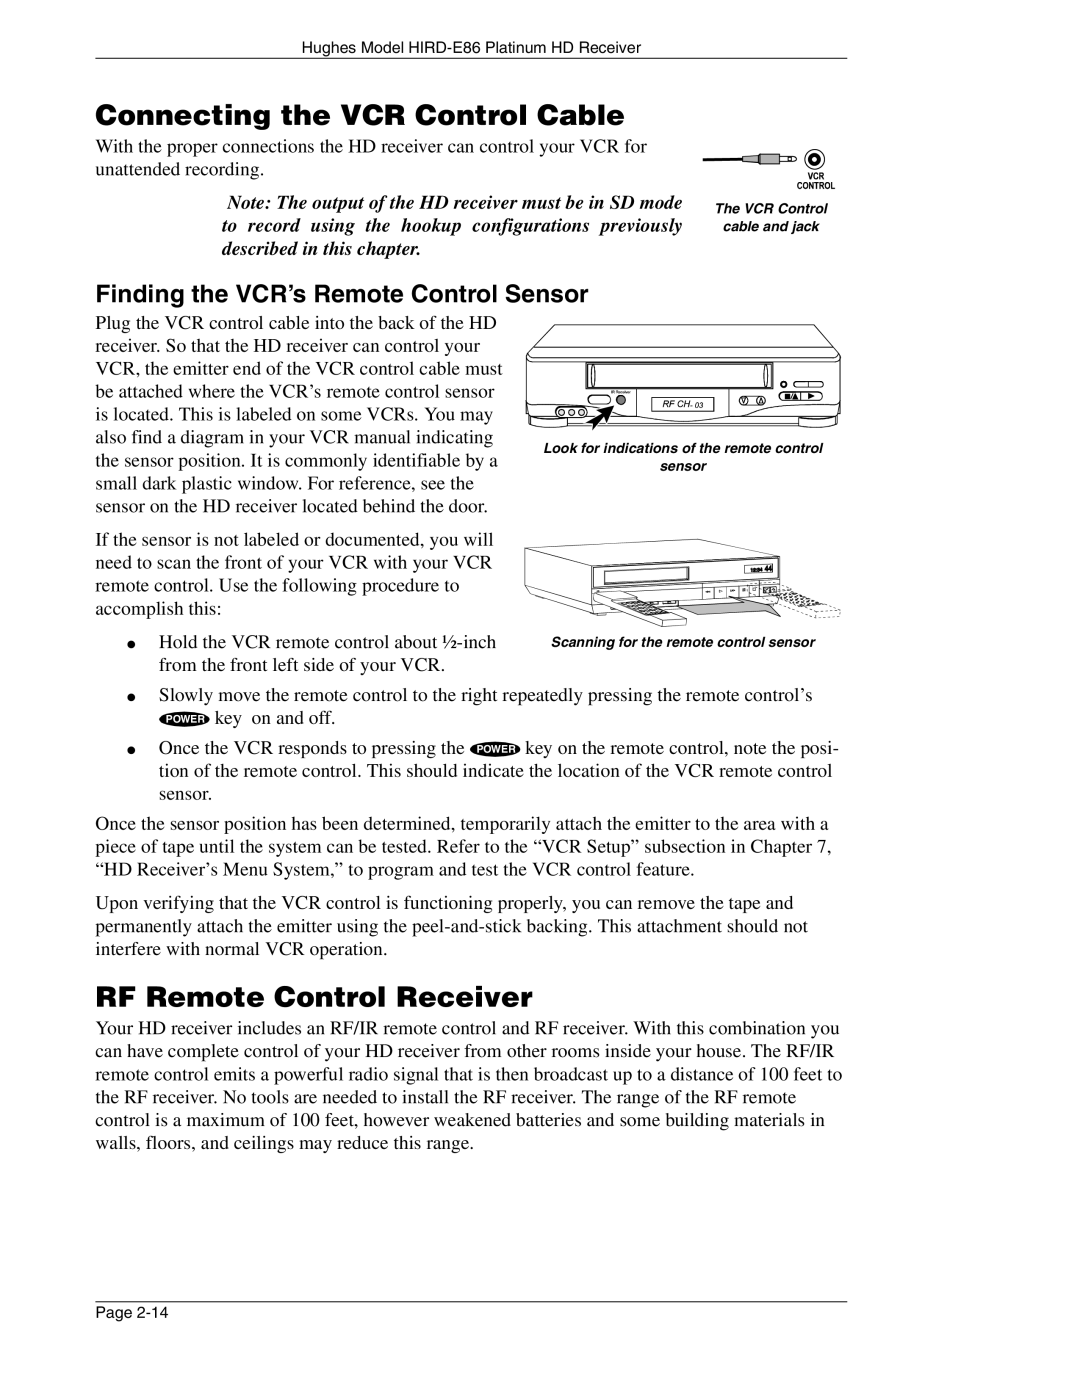 DirecTV HIRD-E86 Connecting the VCR Control Cable, RF Remote Control Receiver, Finding the VCR’s Remote Control Sensor 